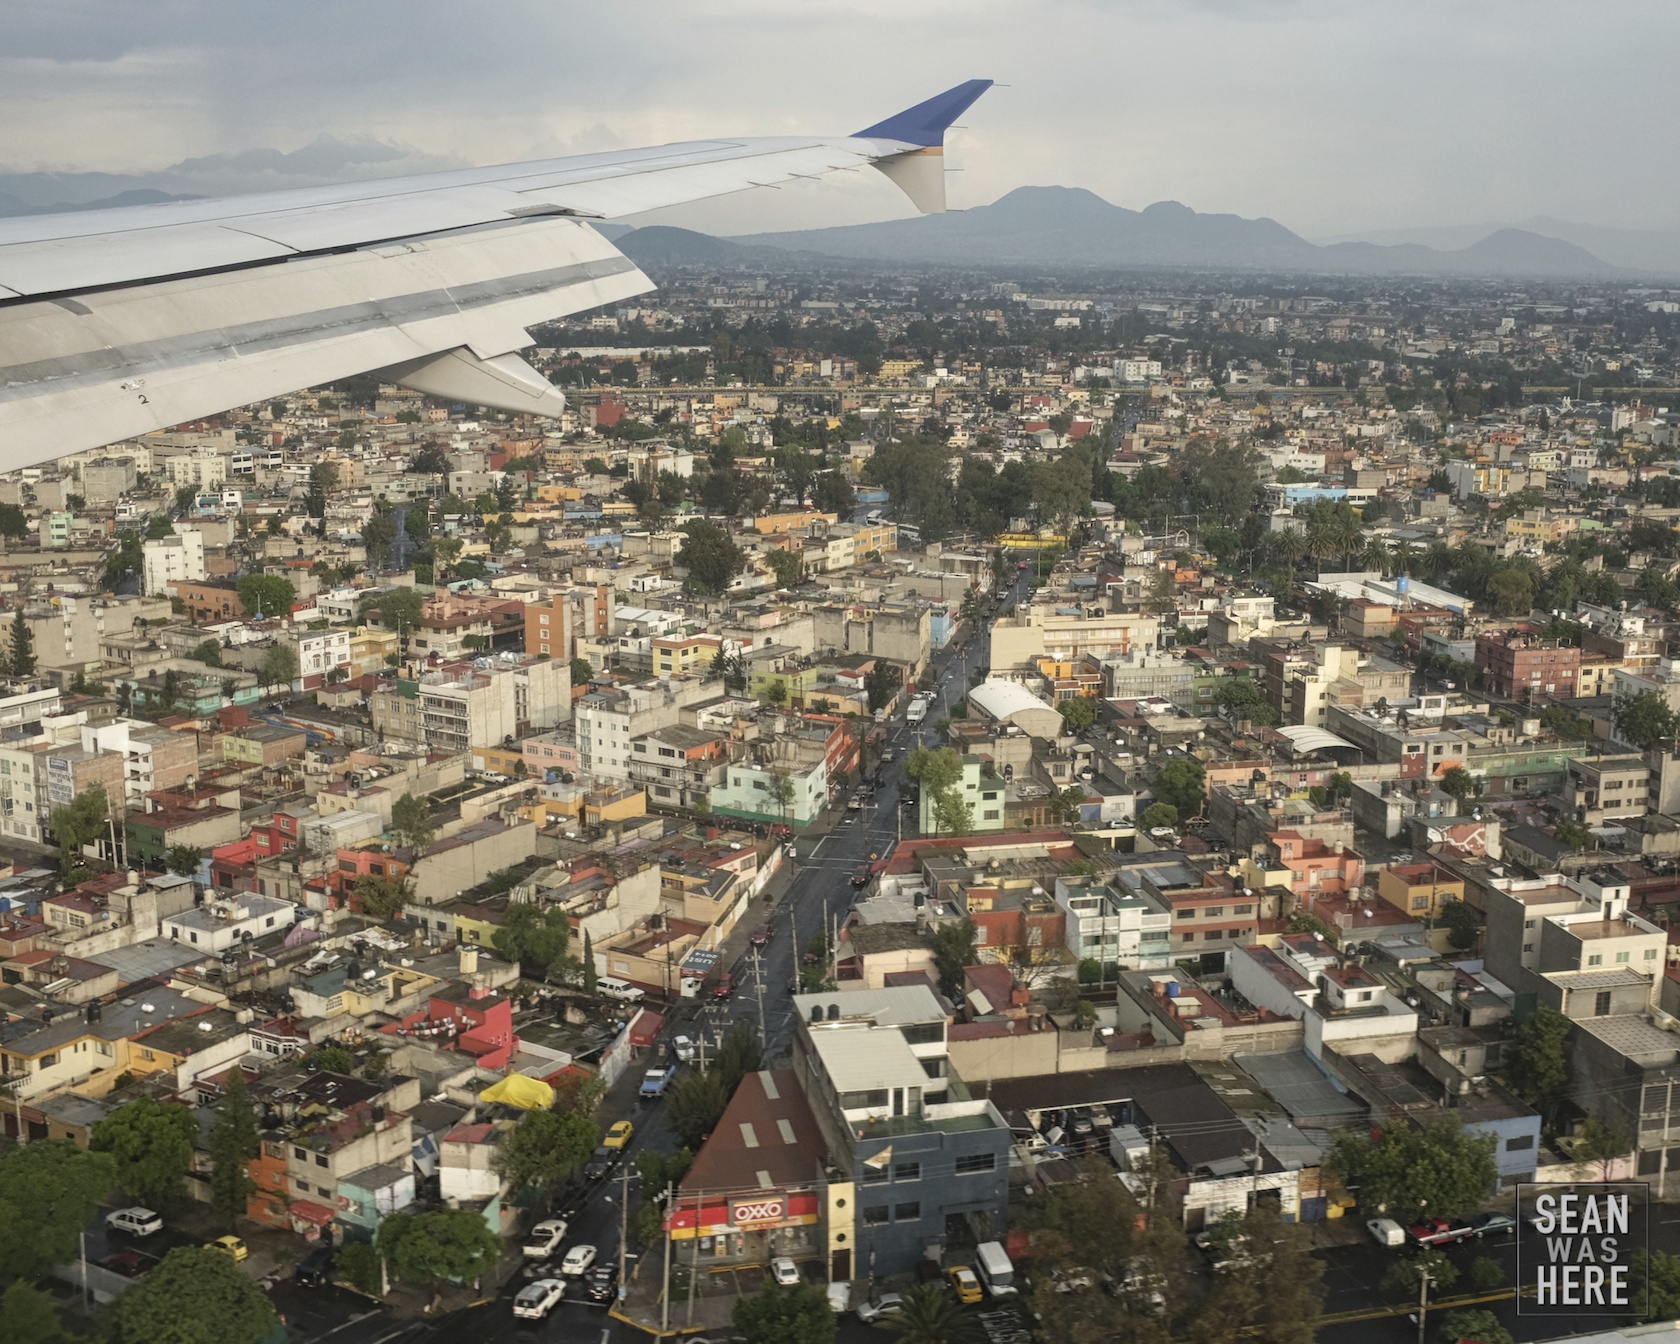 I've left America, again. Mexico City, Mexico